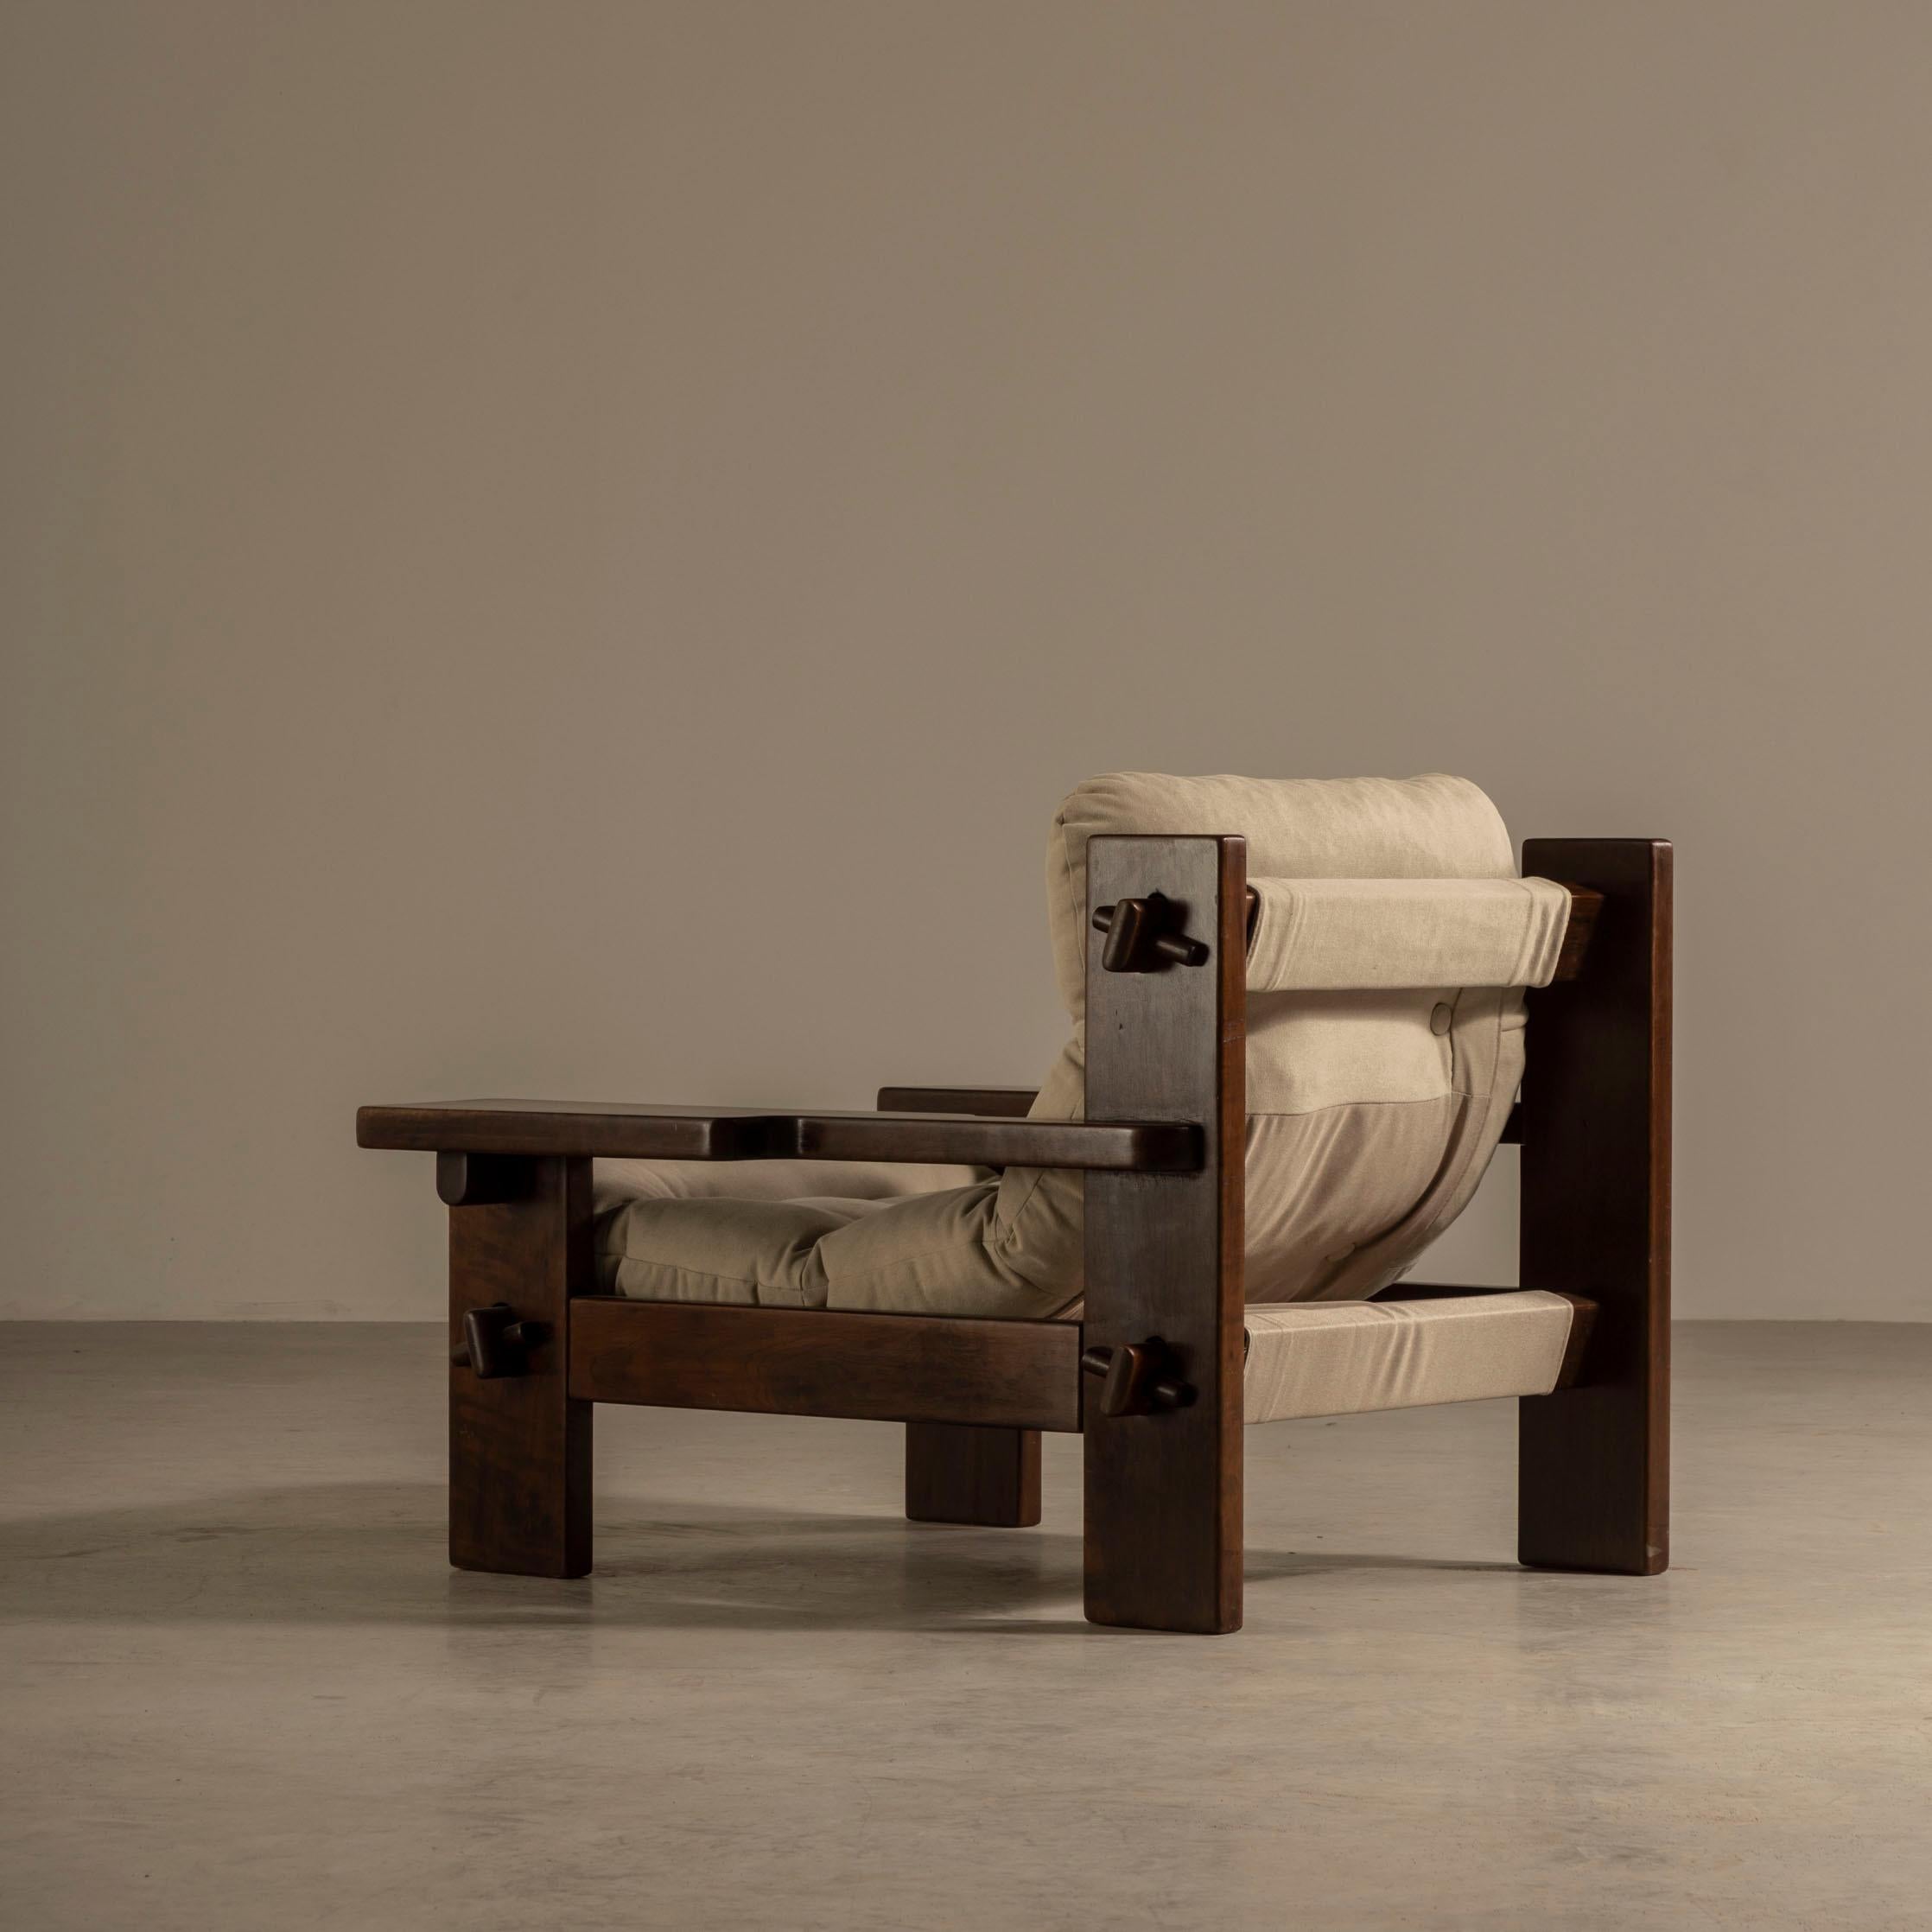 Lounge Chairs by Jean Gillon in Hardwood, Brazilian Midcentury Modern Design 1